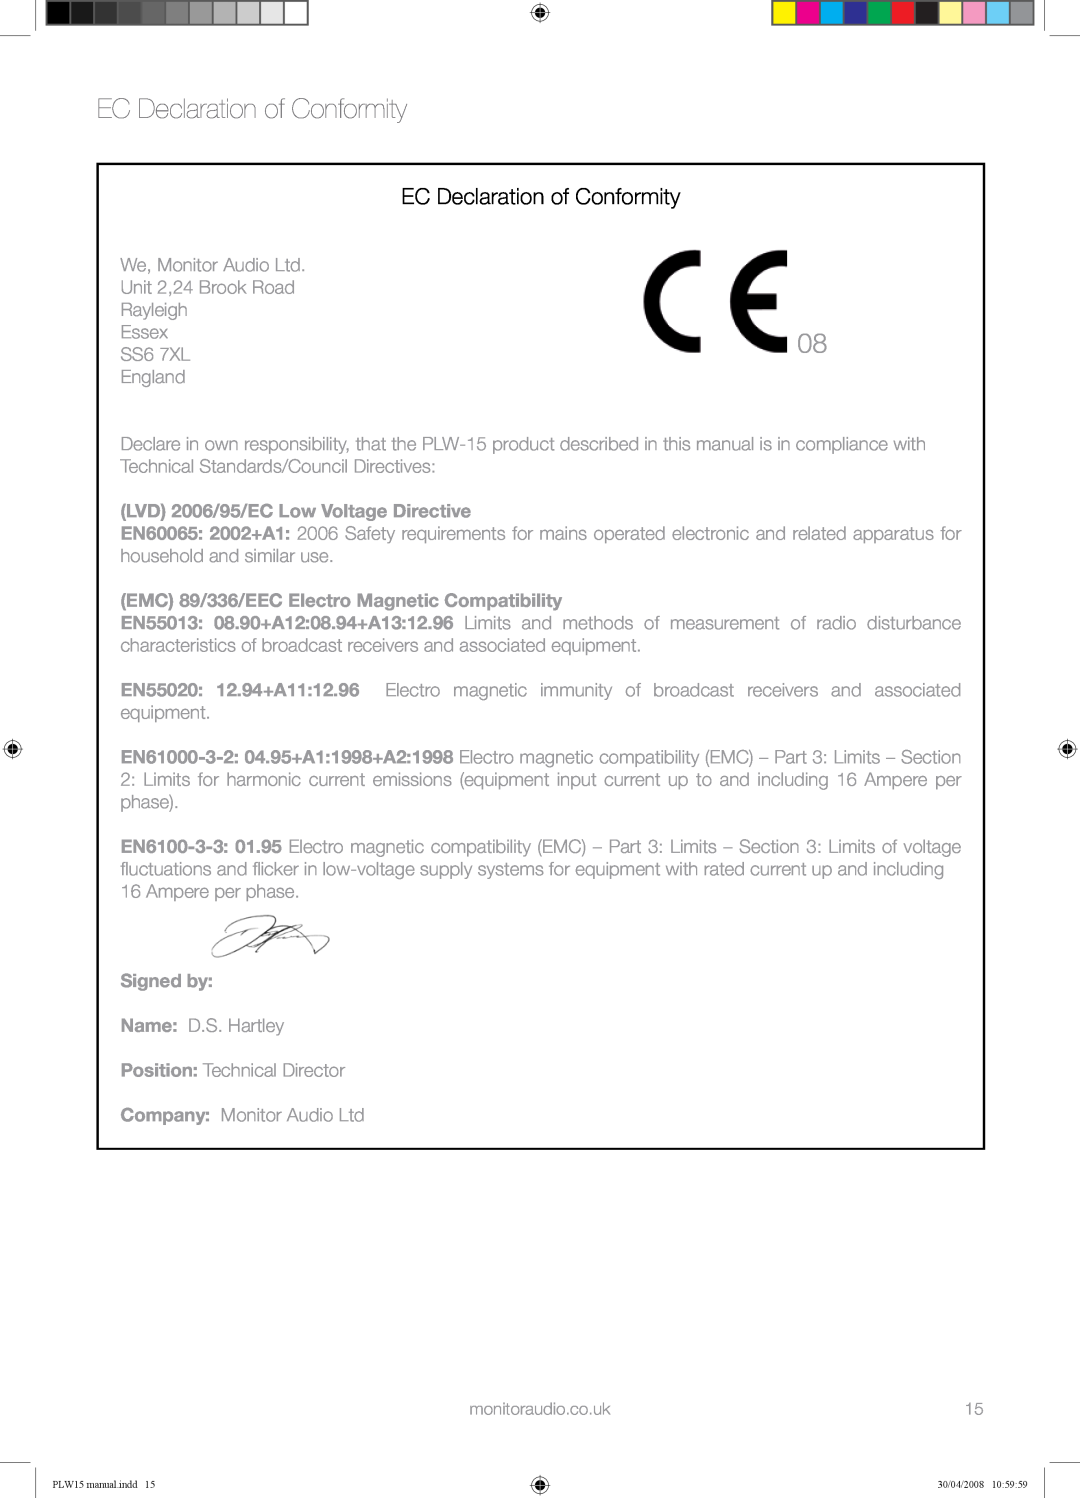 Monitor Audio PLW-15 manual EC Declaration of Conformity, LVD 2006/95/EC Low Voltage Directive, Signed by 